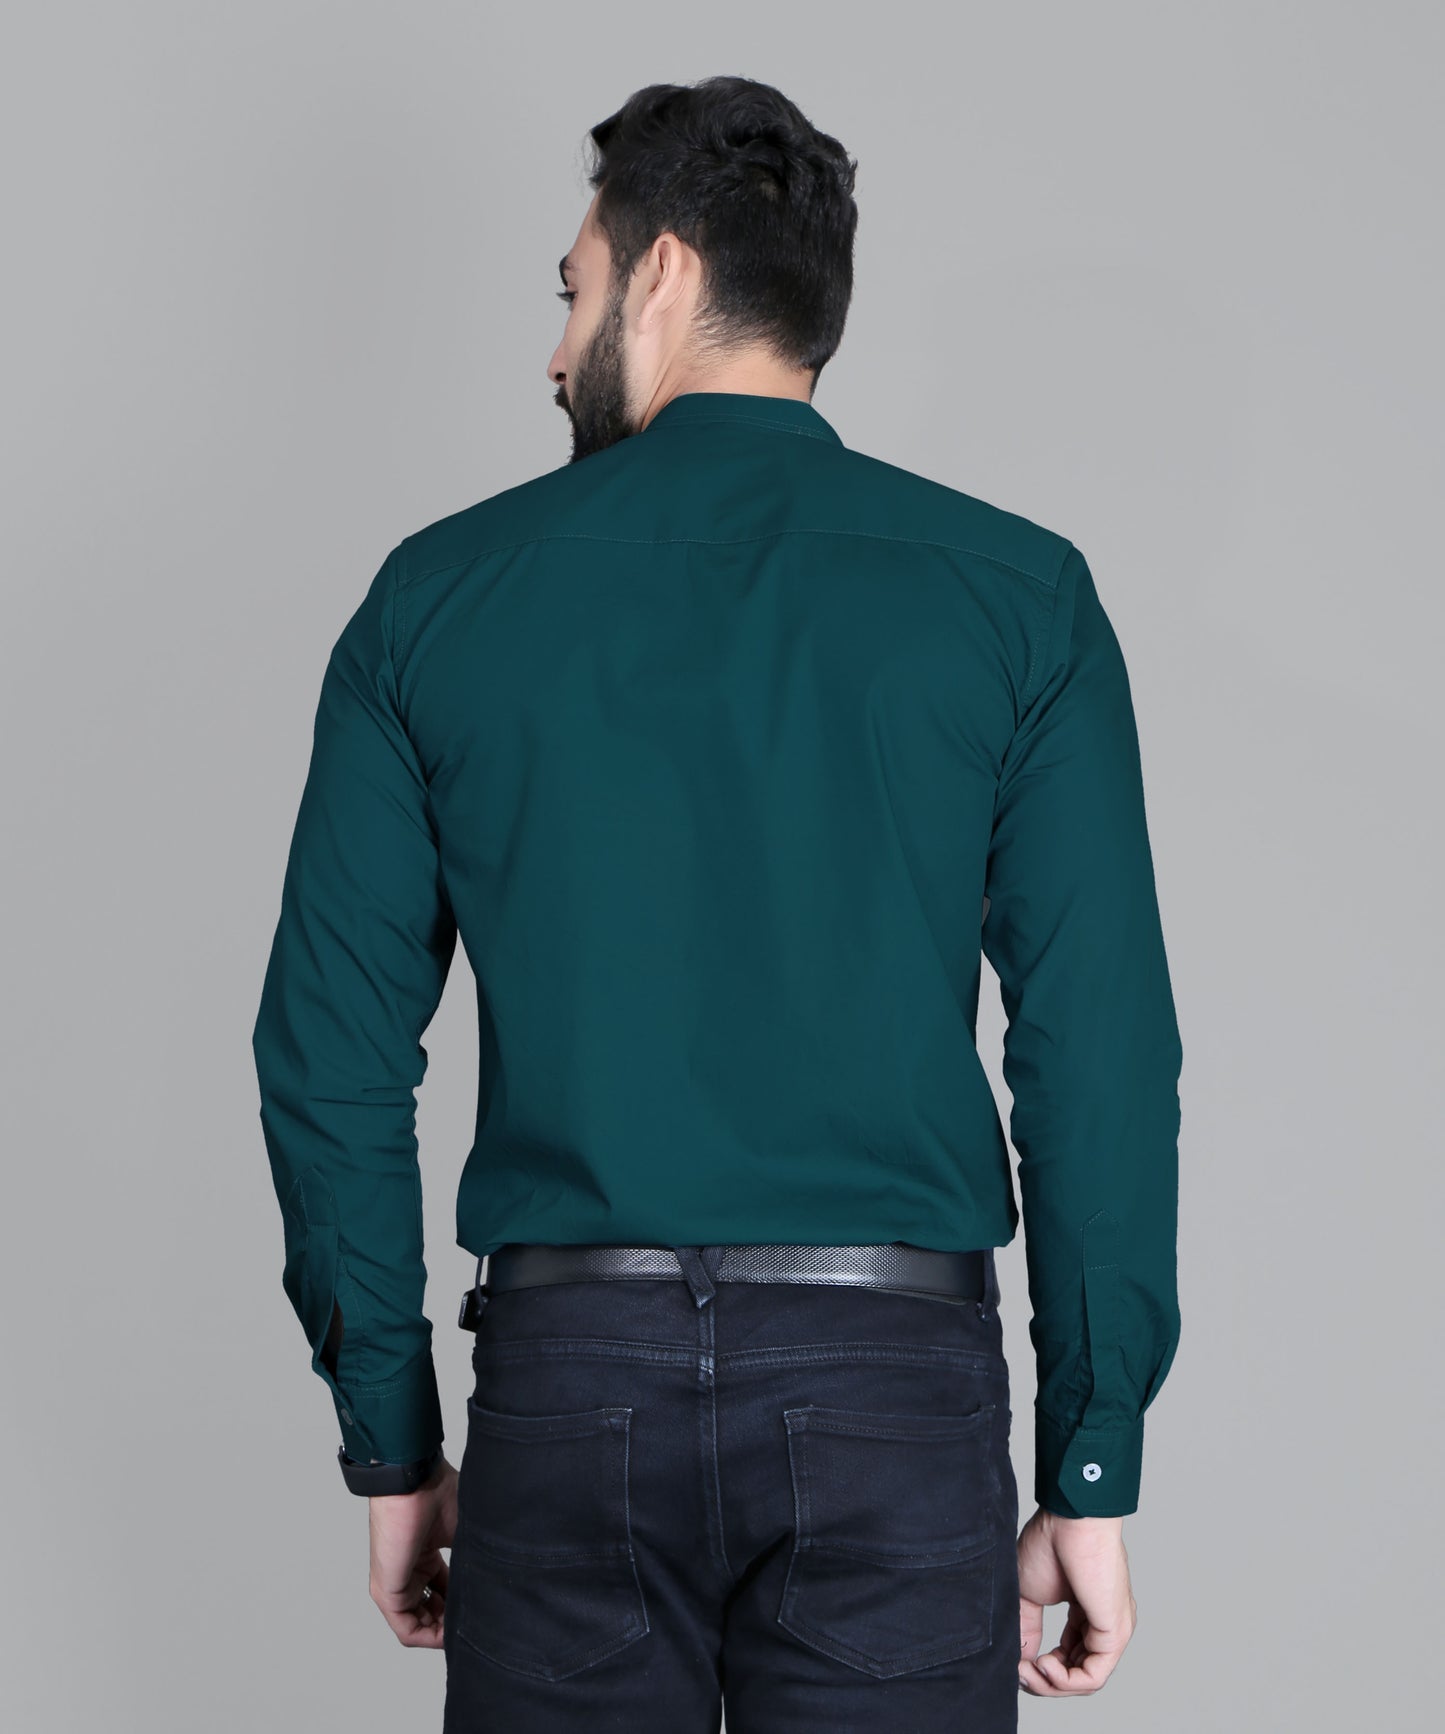 5thanfold Men's Formal Pekok Green Full Sleeve Pure Cotton Mandarin Collar Shirt (No Pocket)